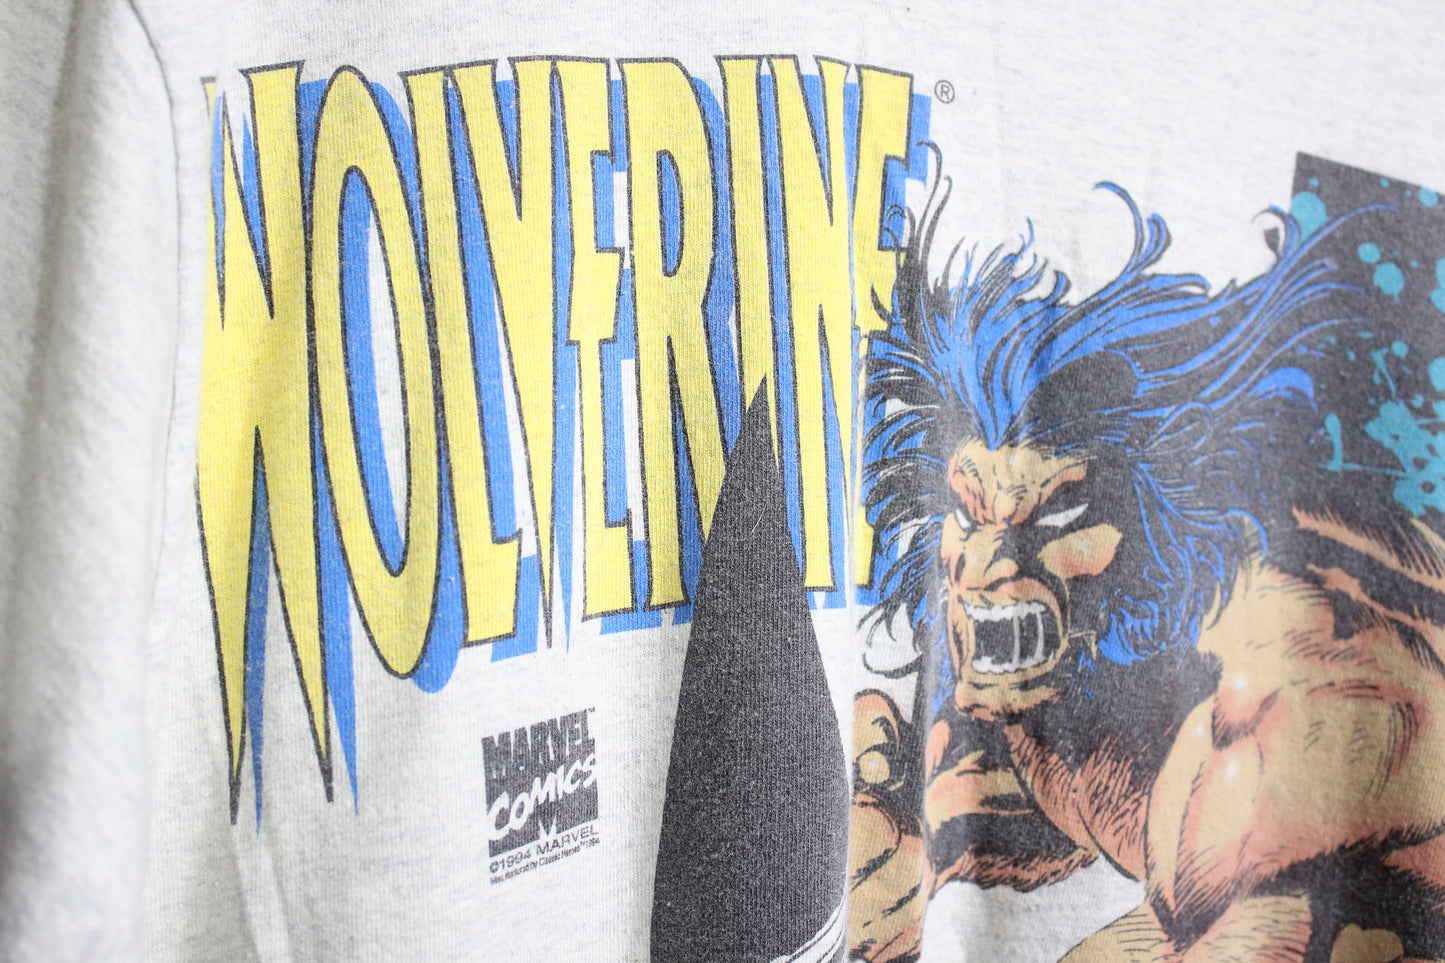 Marvel Comics Wolverine T-Shirt, Size M, 1994